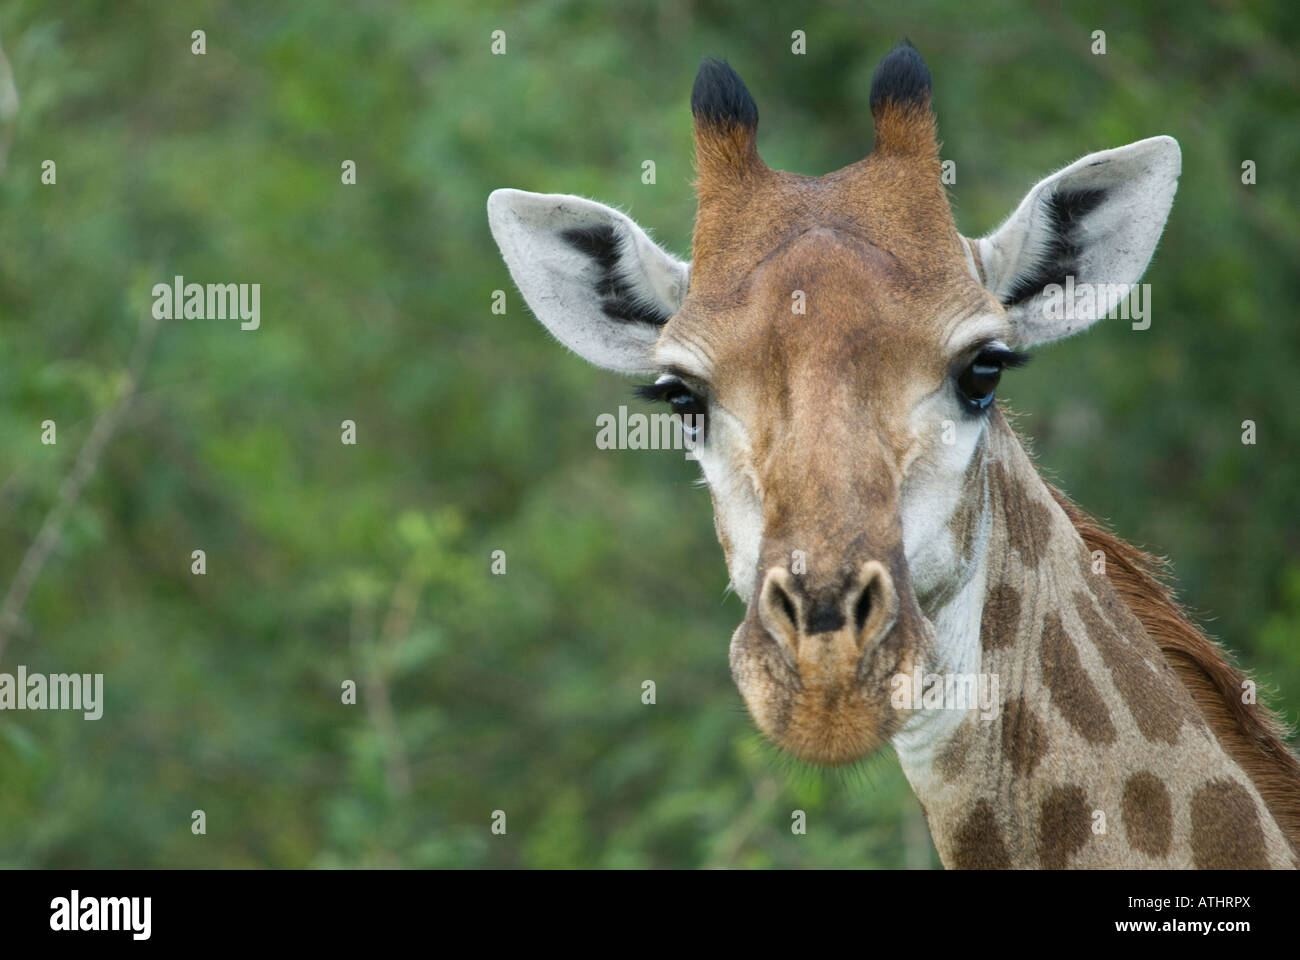 A female giraffe posing in the African bush Stock Photo